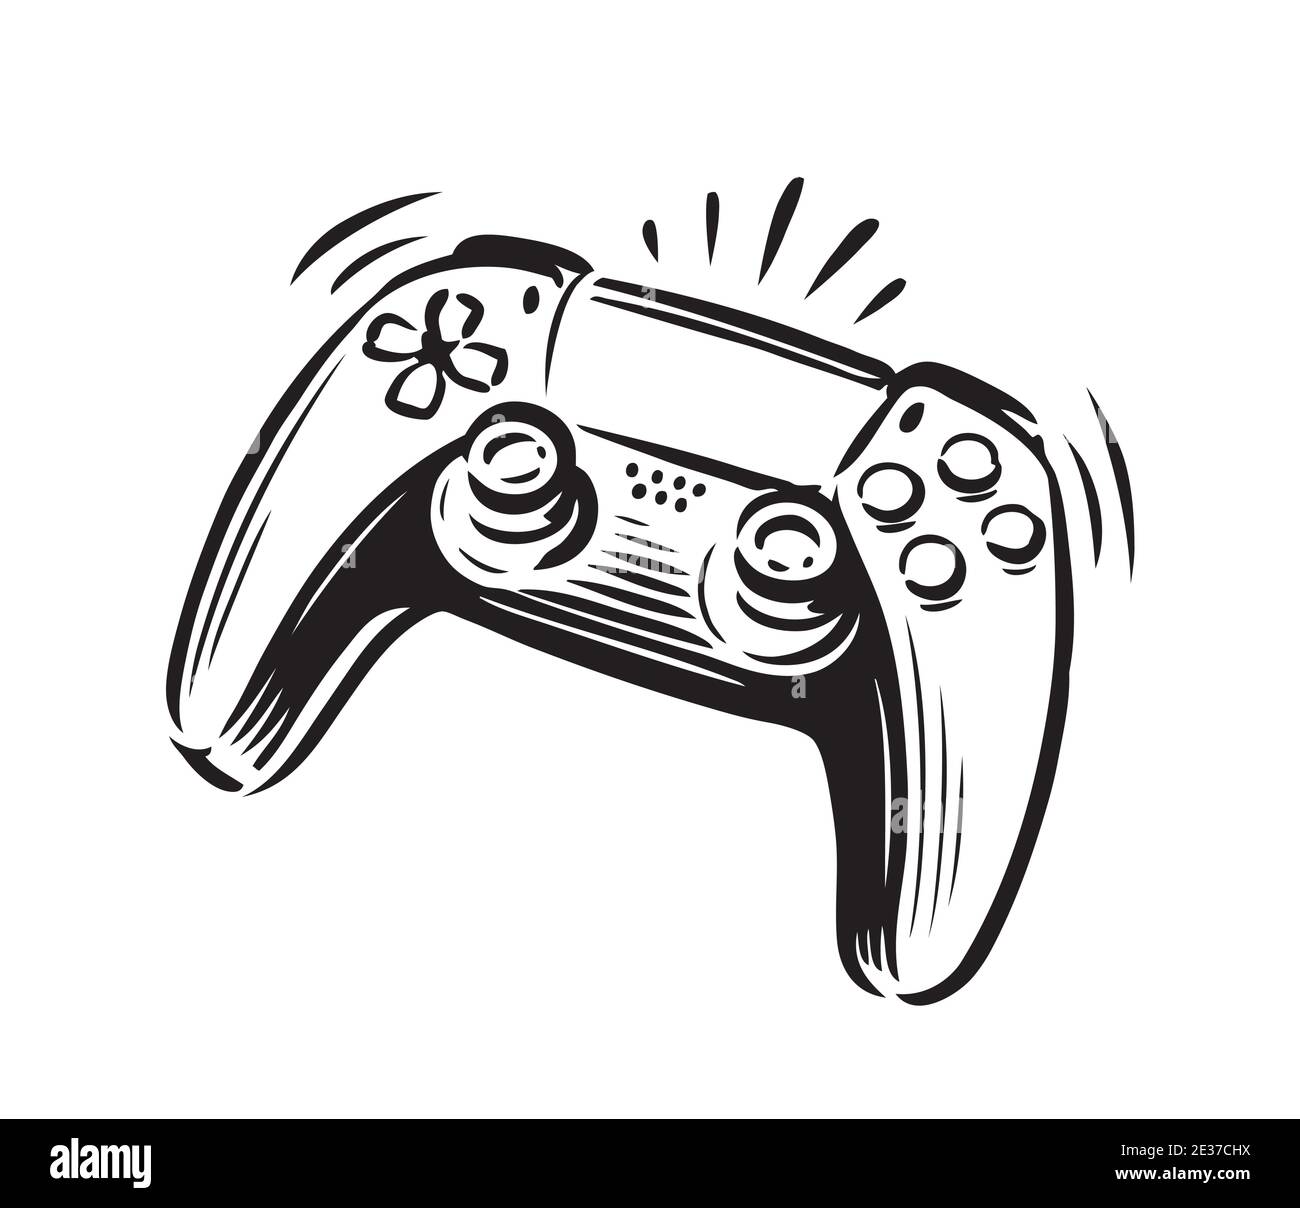 Game controller symbol. Joystick vector illustration Stock Vector